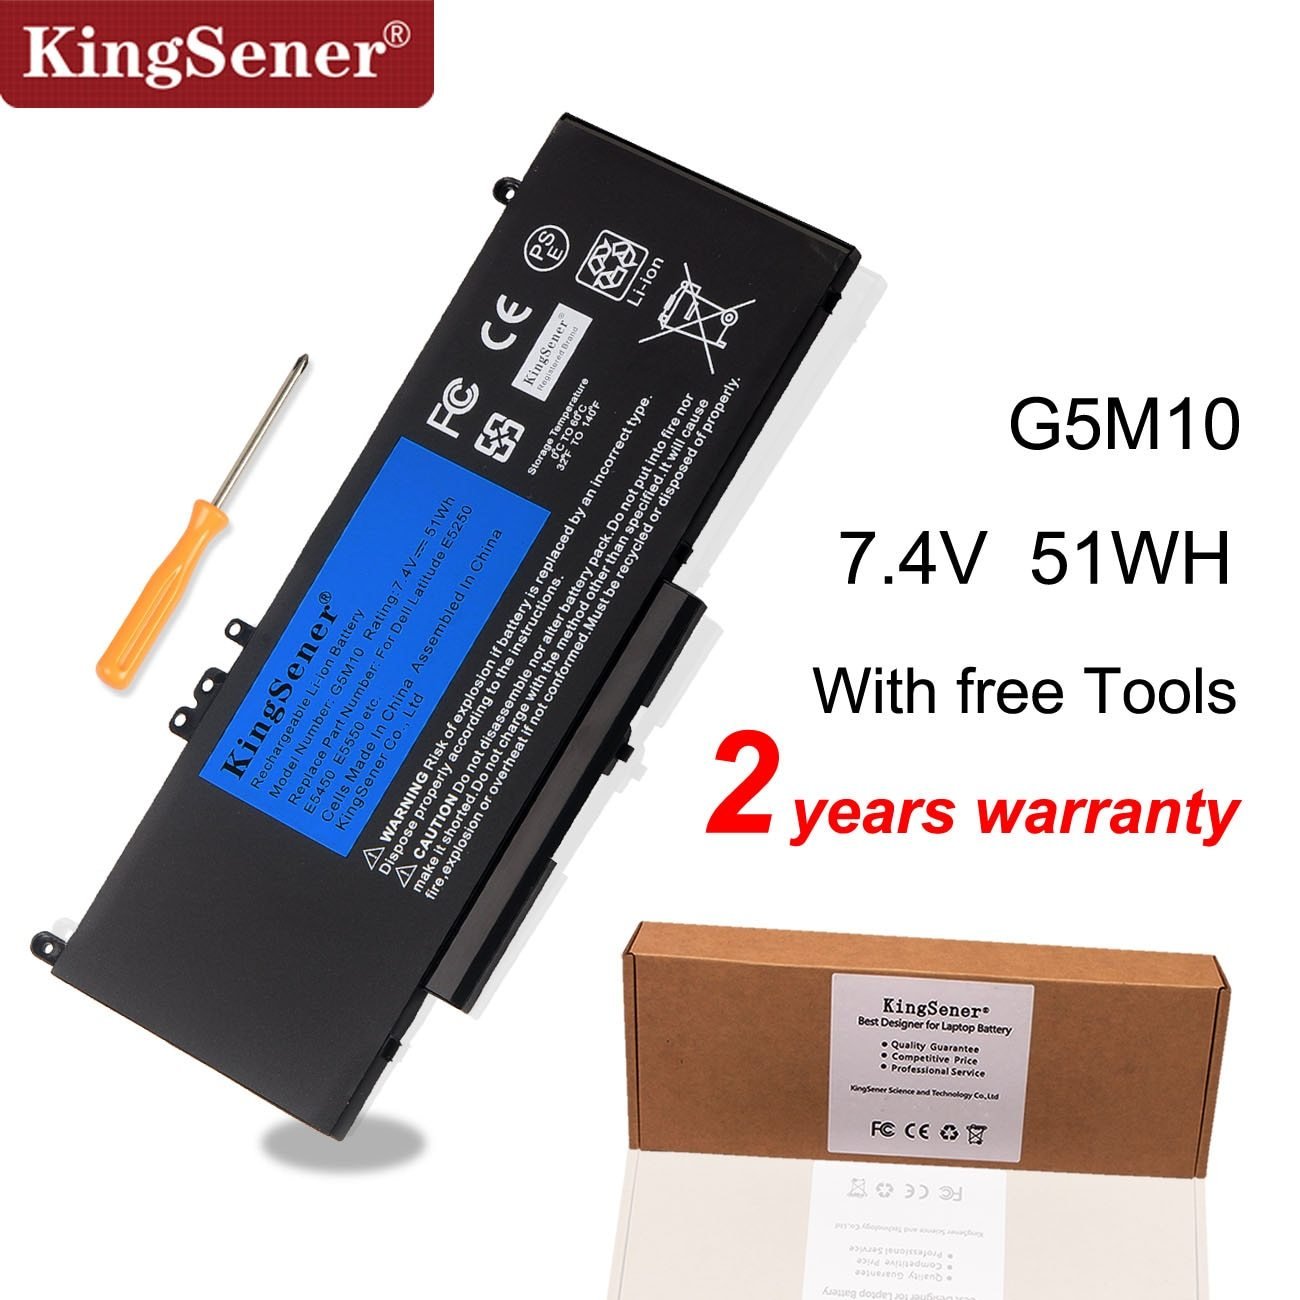 KingSener G5M10 Laptop battery For DELL Latitude E5250 E5450 E5550 8V5GX R9XM9 WYJC2 1KY05 7.4V 51WH Free Tool GreatEagleInc